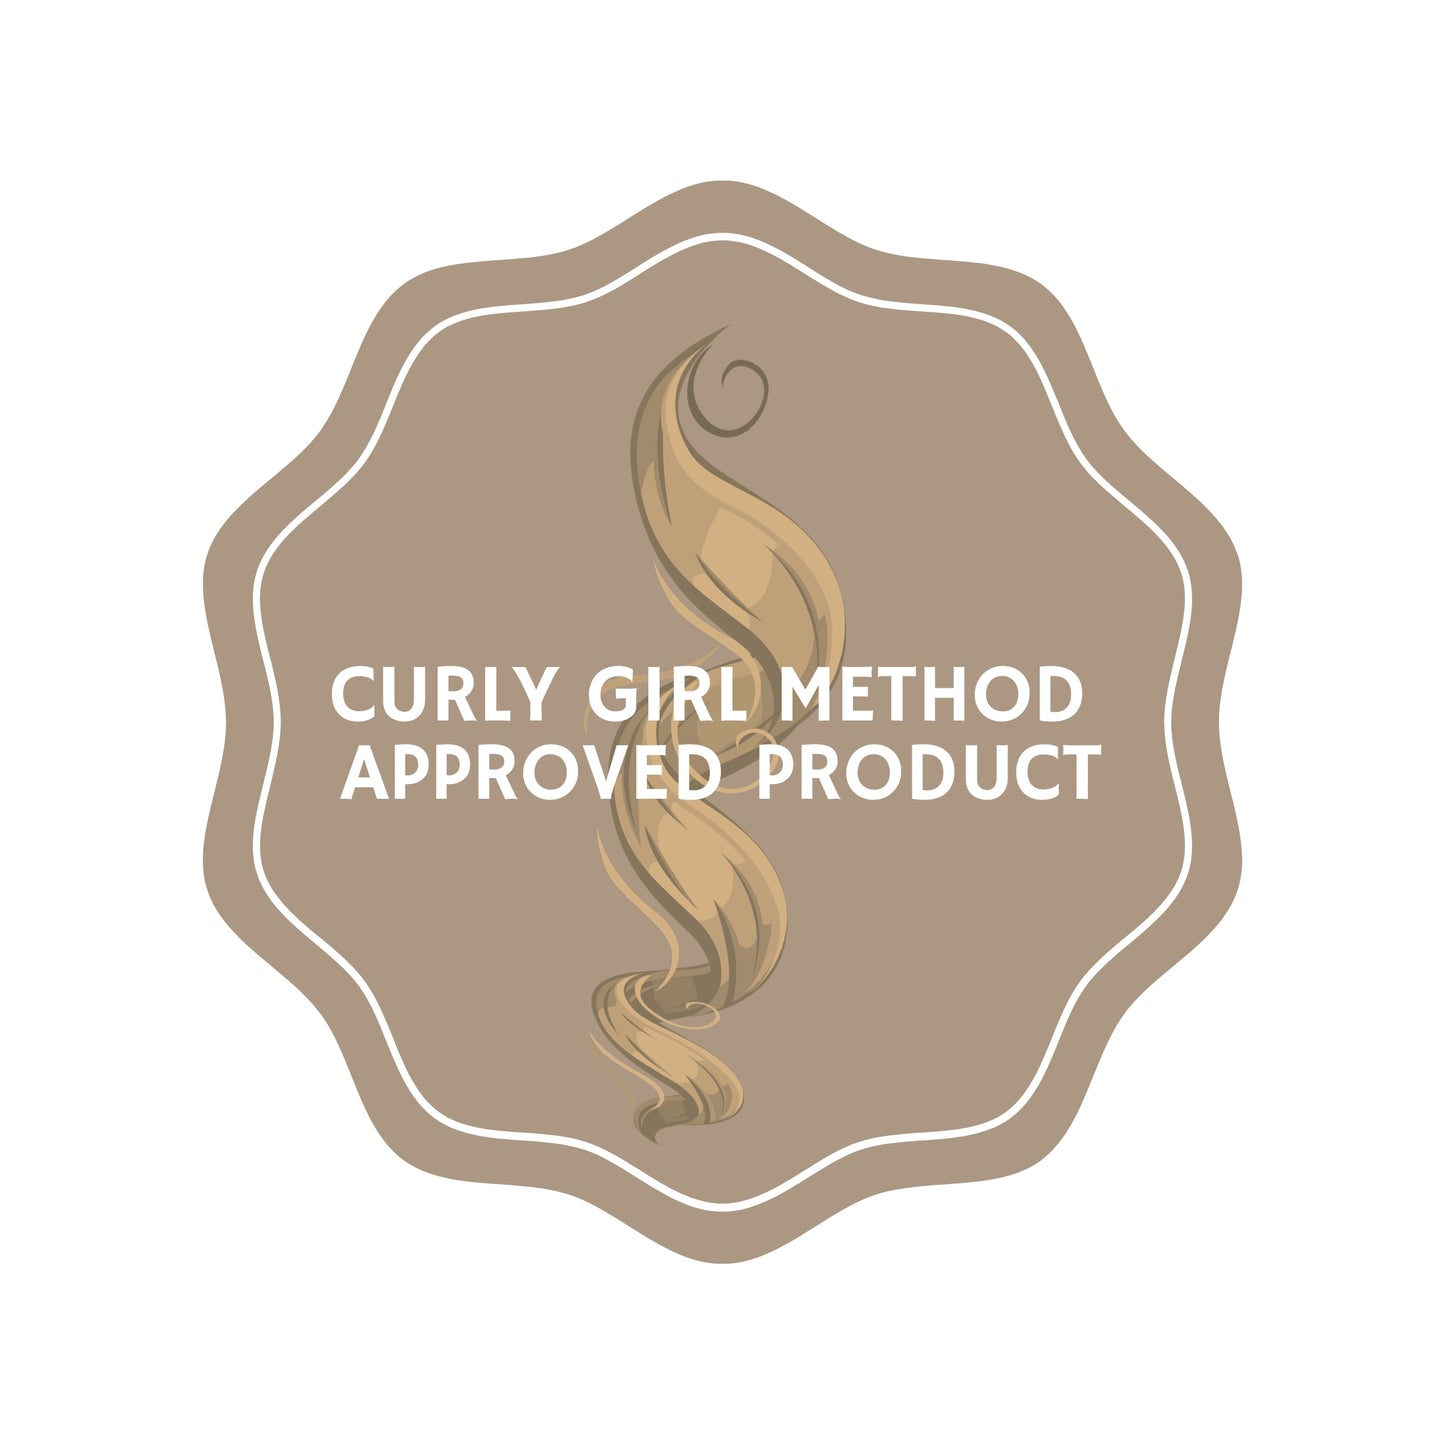 Flora & Curl - Coconut Mint Curl Refresh Conditioner